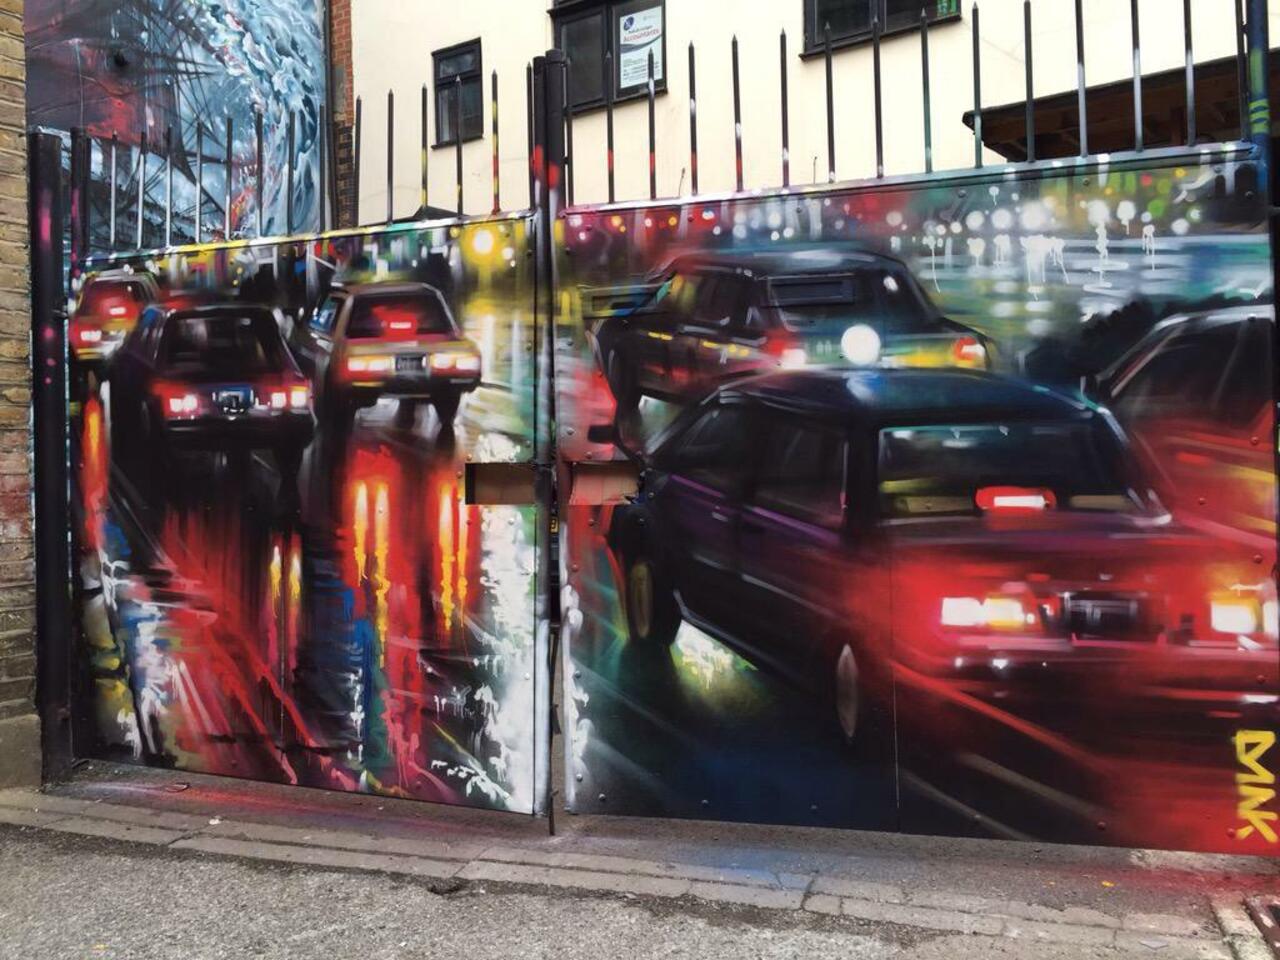 New Street Art by DanKitchener in Brick Lane London 

#art #graffiti #mural #streetart http://t.co/0lcdokS7Jh